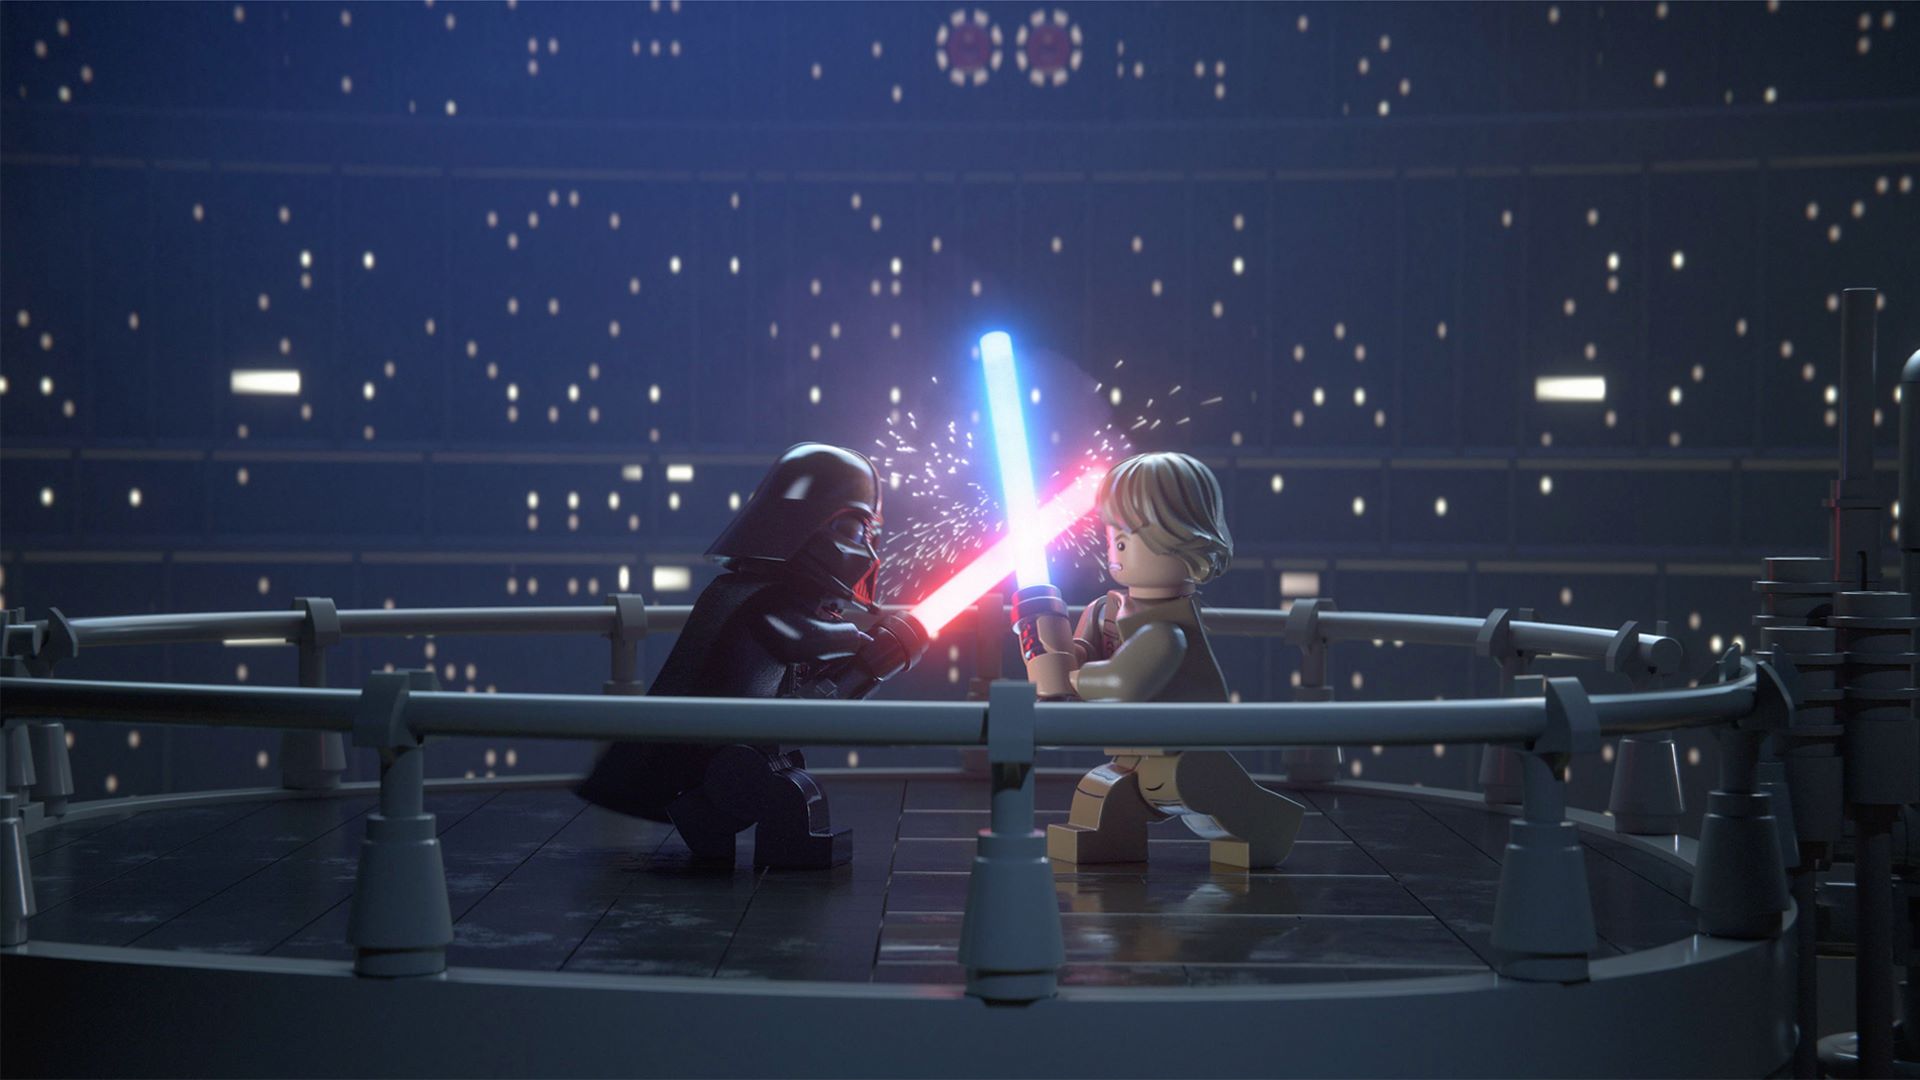 LEGO Star Wars: La Saga degli Skywalker